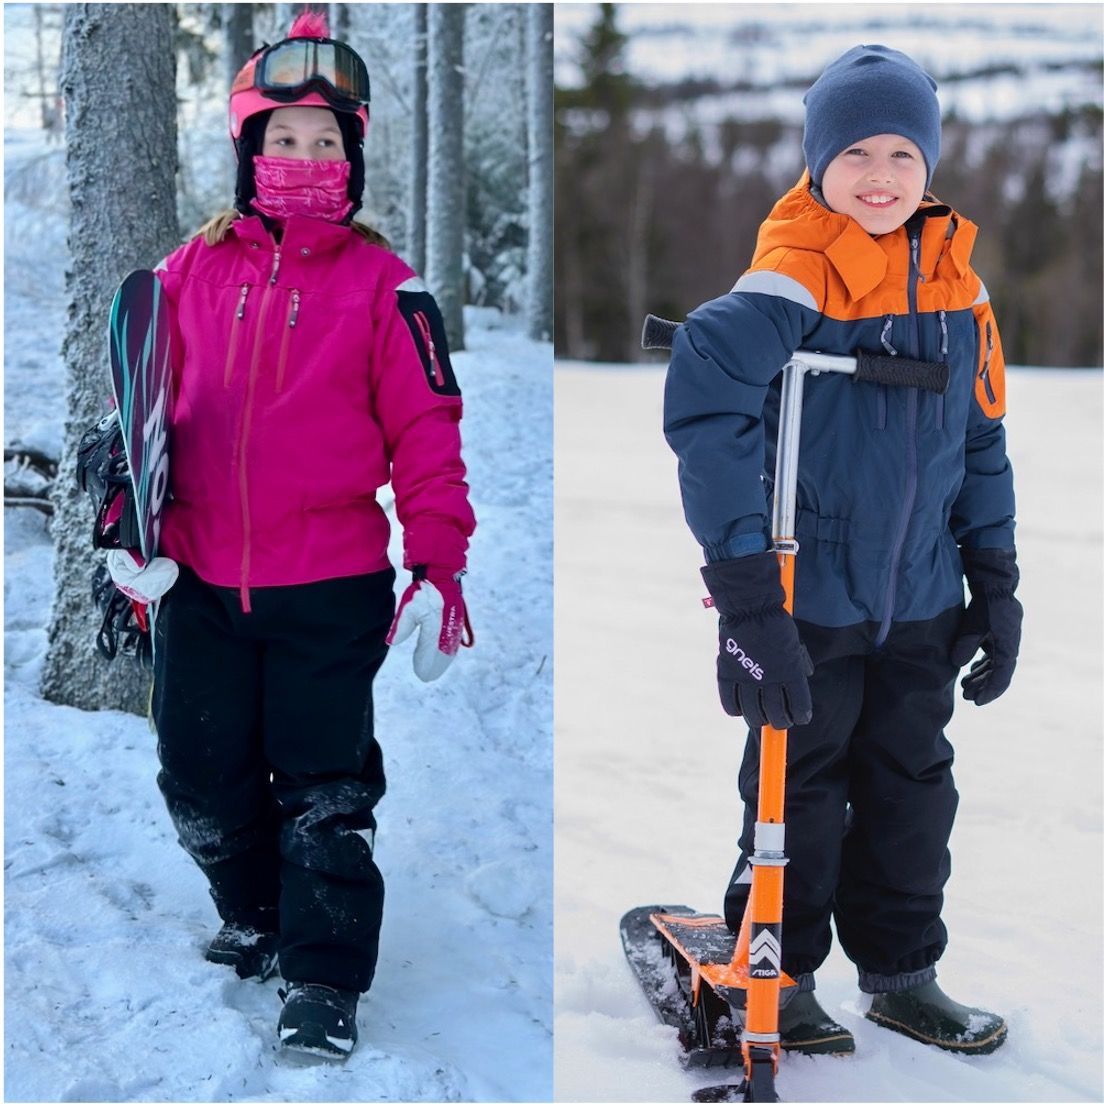 Ett barn i cerice Gneis overall med snowboard och ett annat i blå-orange overall med snowbike